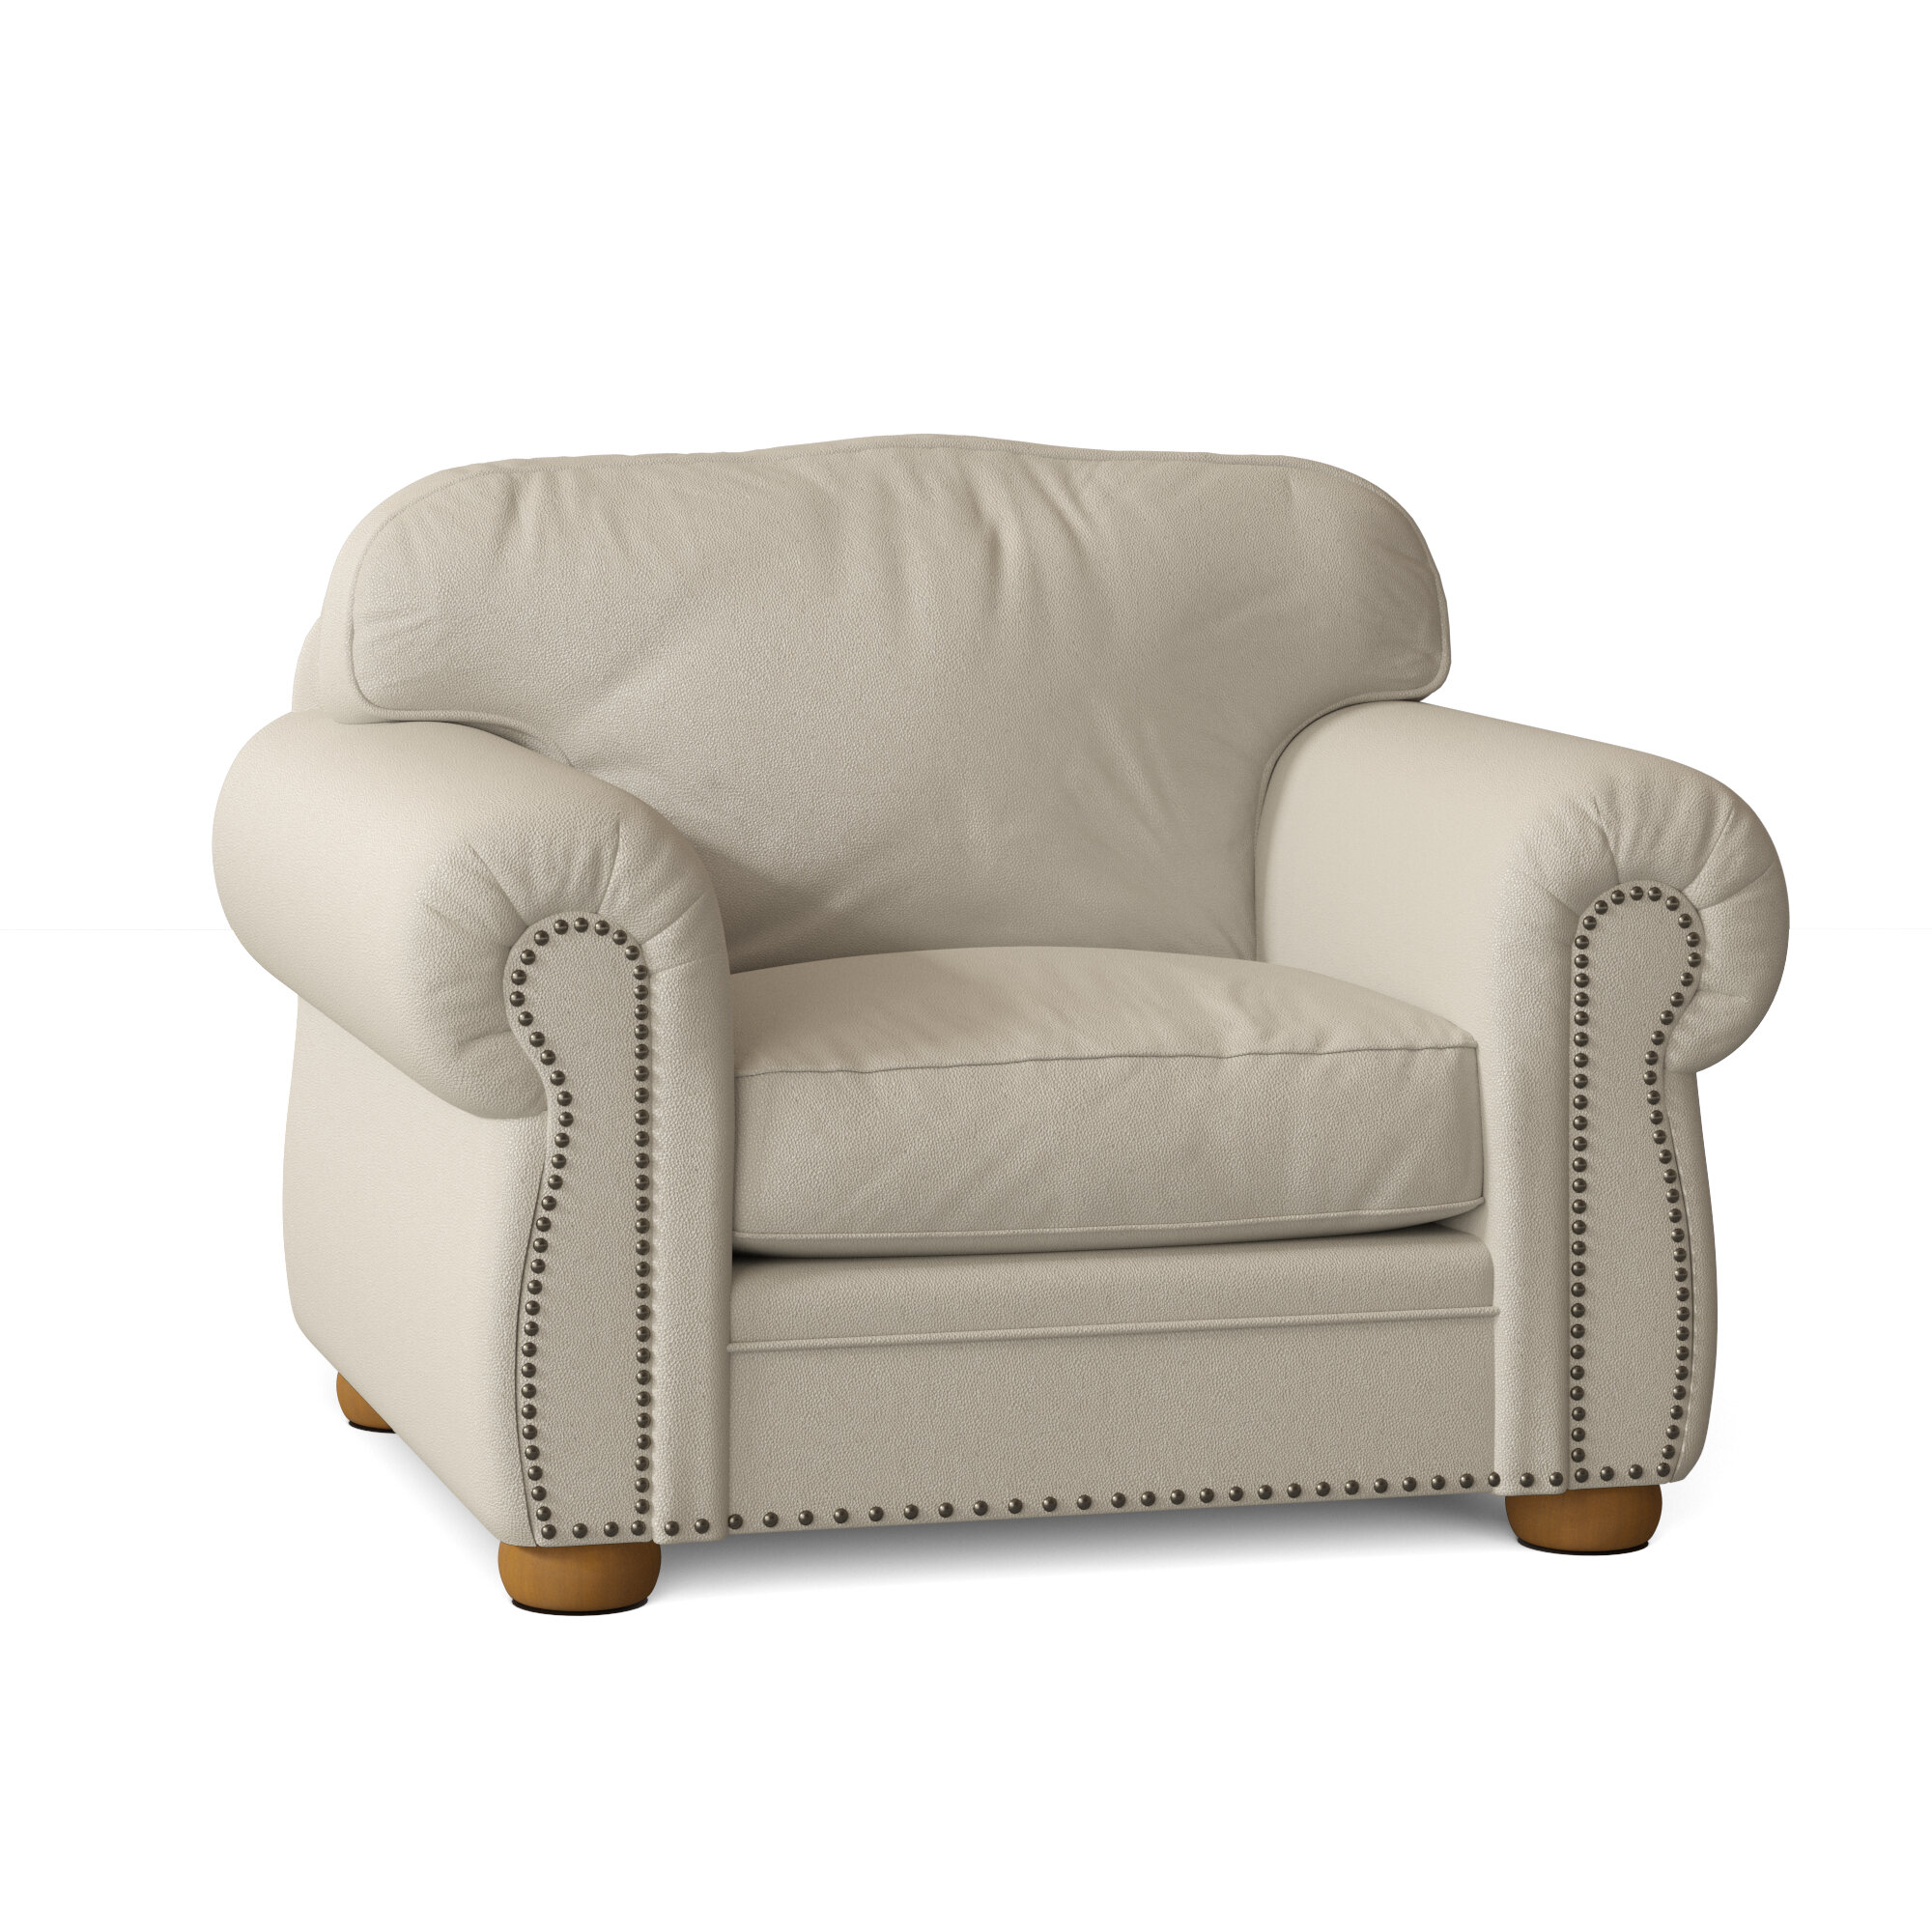 Omnia Leather Monte Carlo 48 Wide Genuine Leather Top Grain Leather Down Cushion Club Chair Wayfair